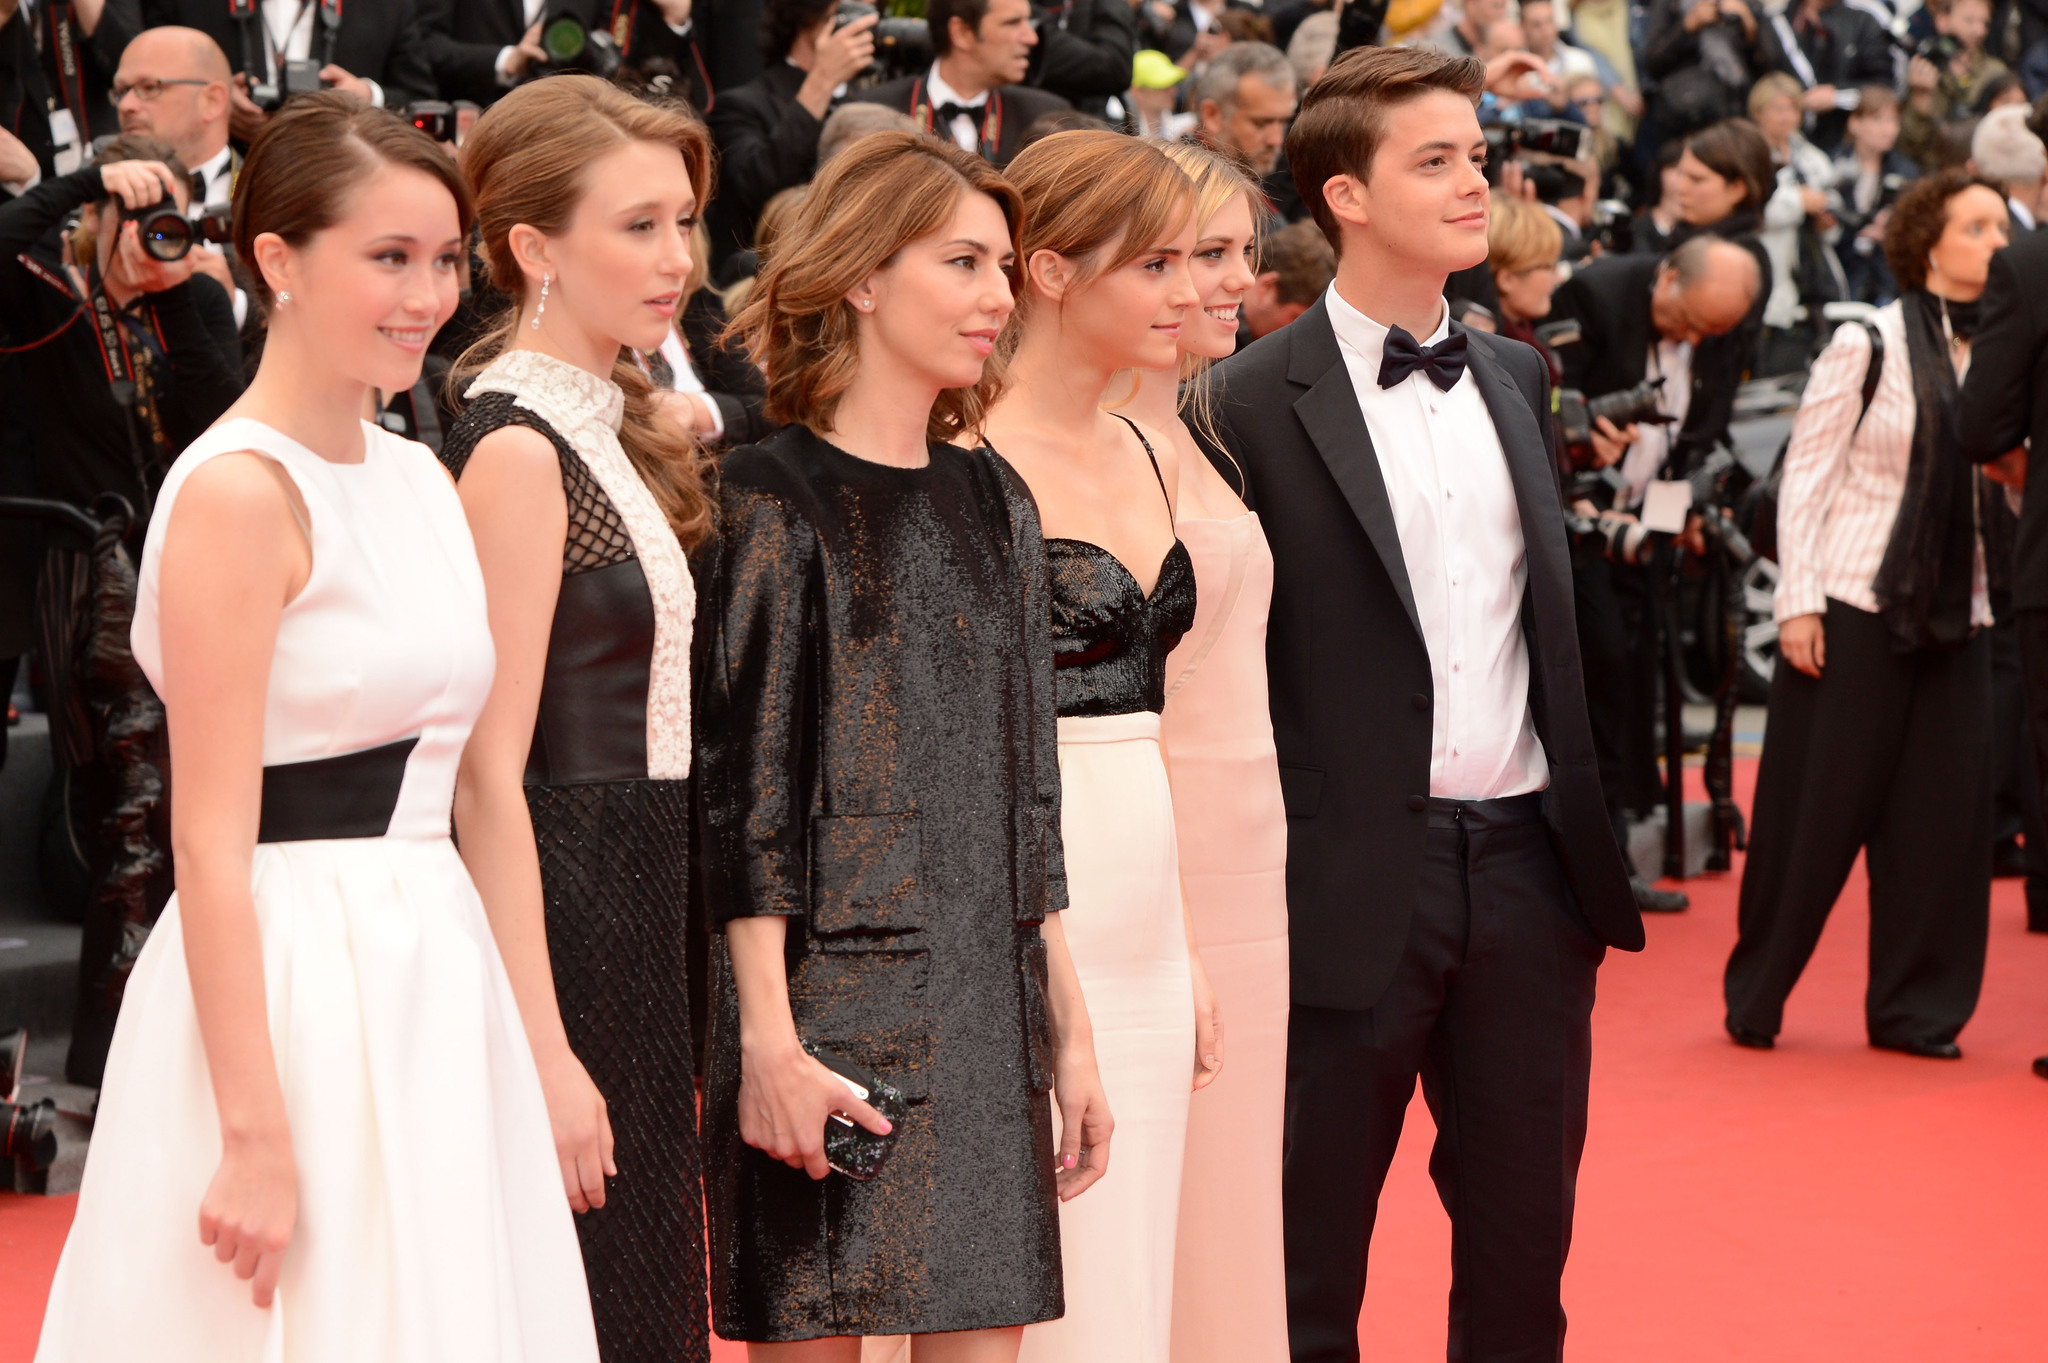 Sofia Coppola, Emma Watson, Israel Broussard, Taissa Farmiga, Katie Chang and Claire Julien at event of Elitinis jaunimas (2013)